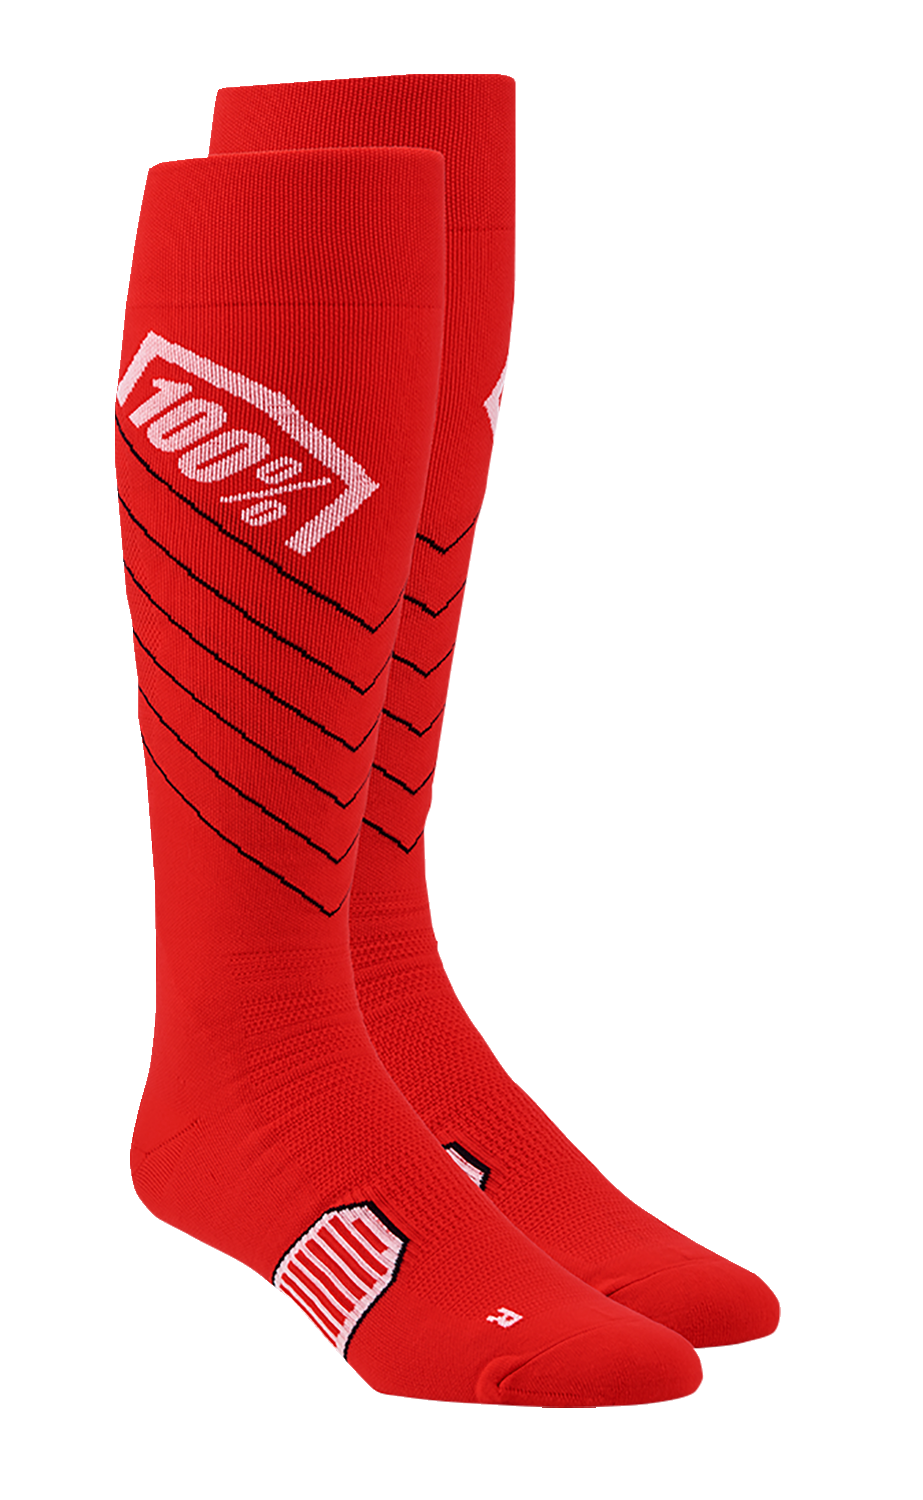 100% Hi-Side Performance Socks - Red - Small/Medium 20054-00007